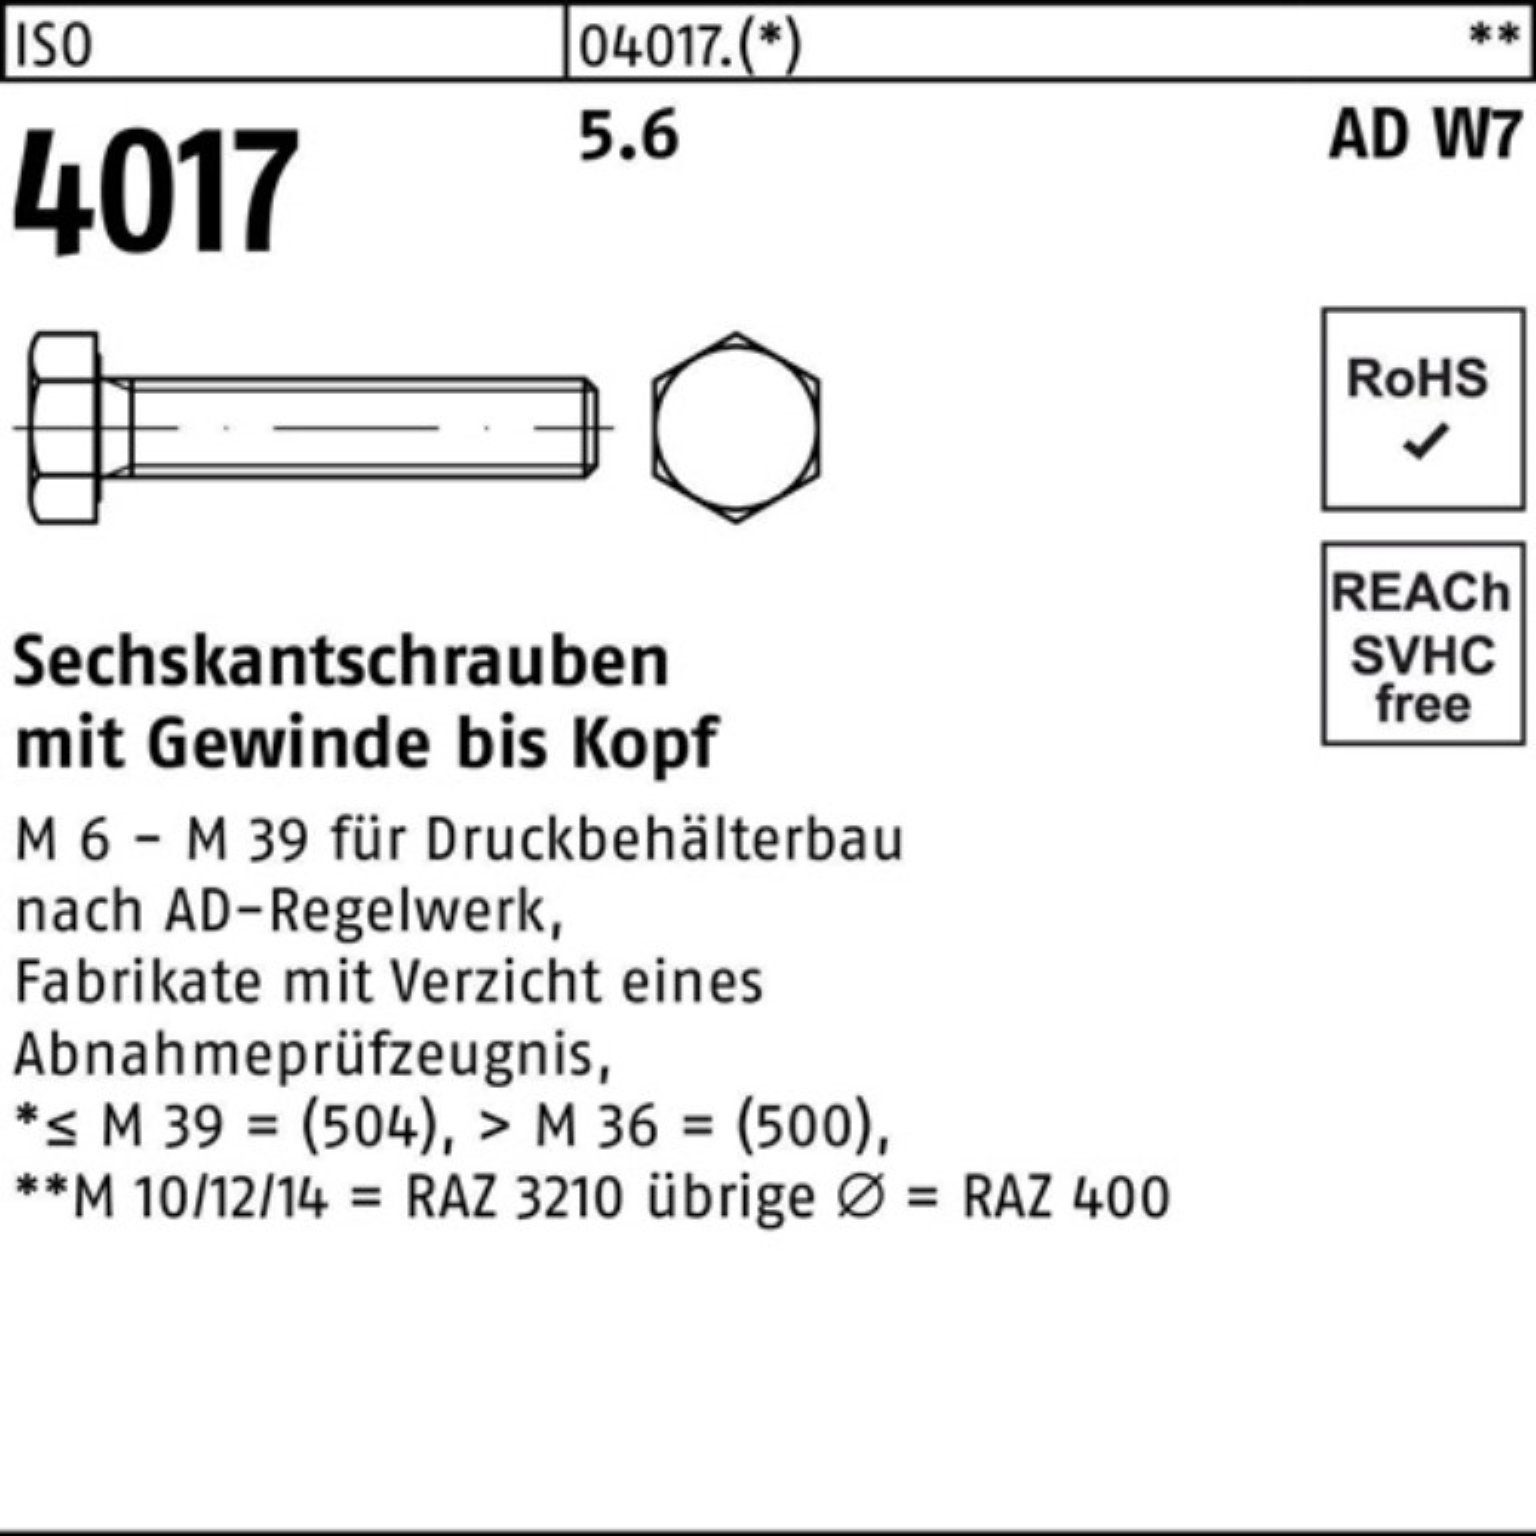 Sechskantschraube Bufab 5.6 VG Pack ISO Sechskantschraube AD 100er Stück 50 W7 4017 IS M30x 1